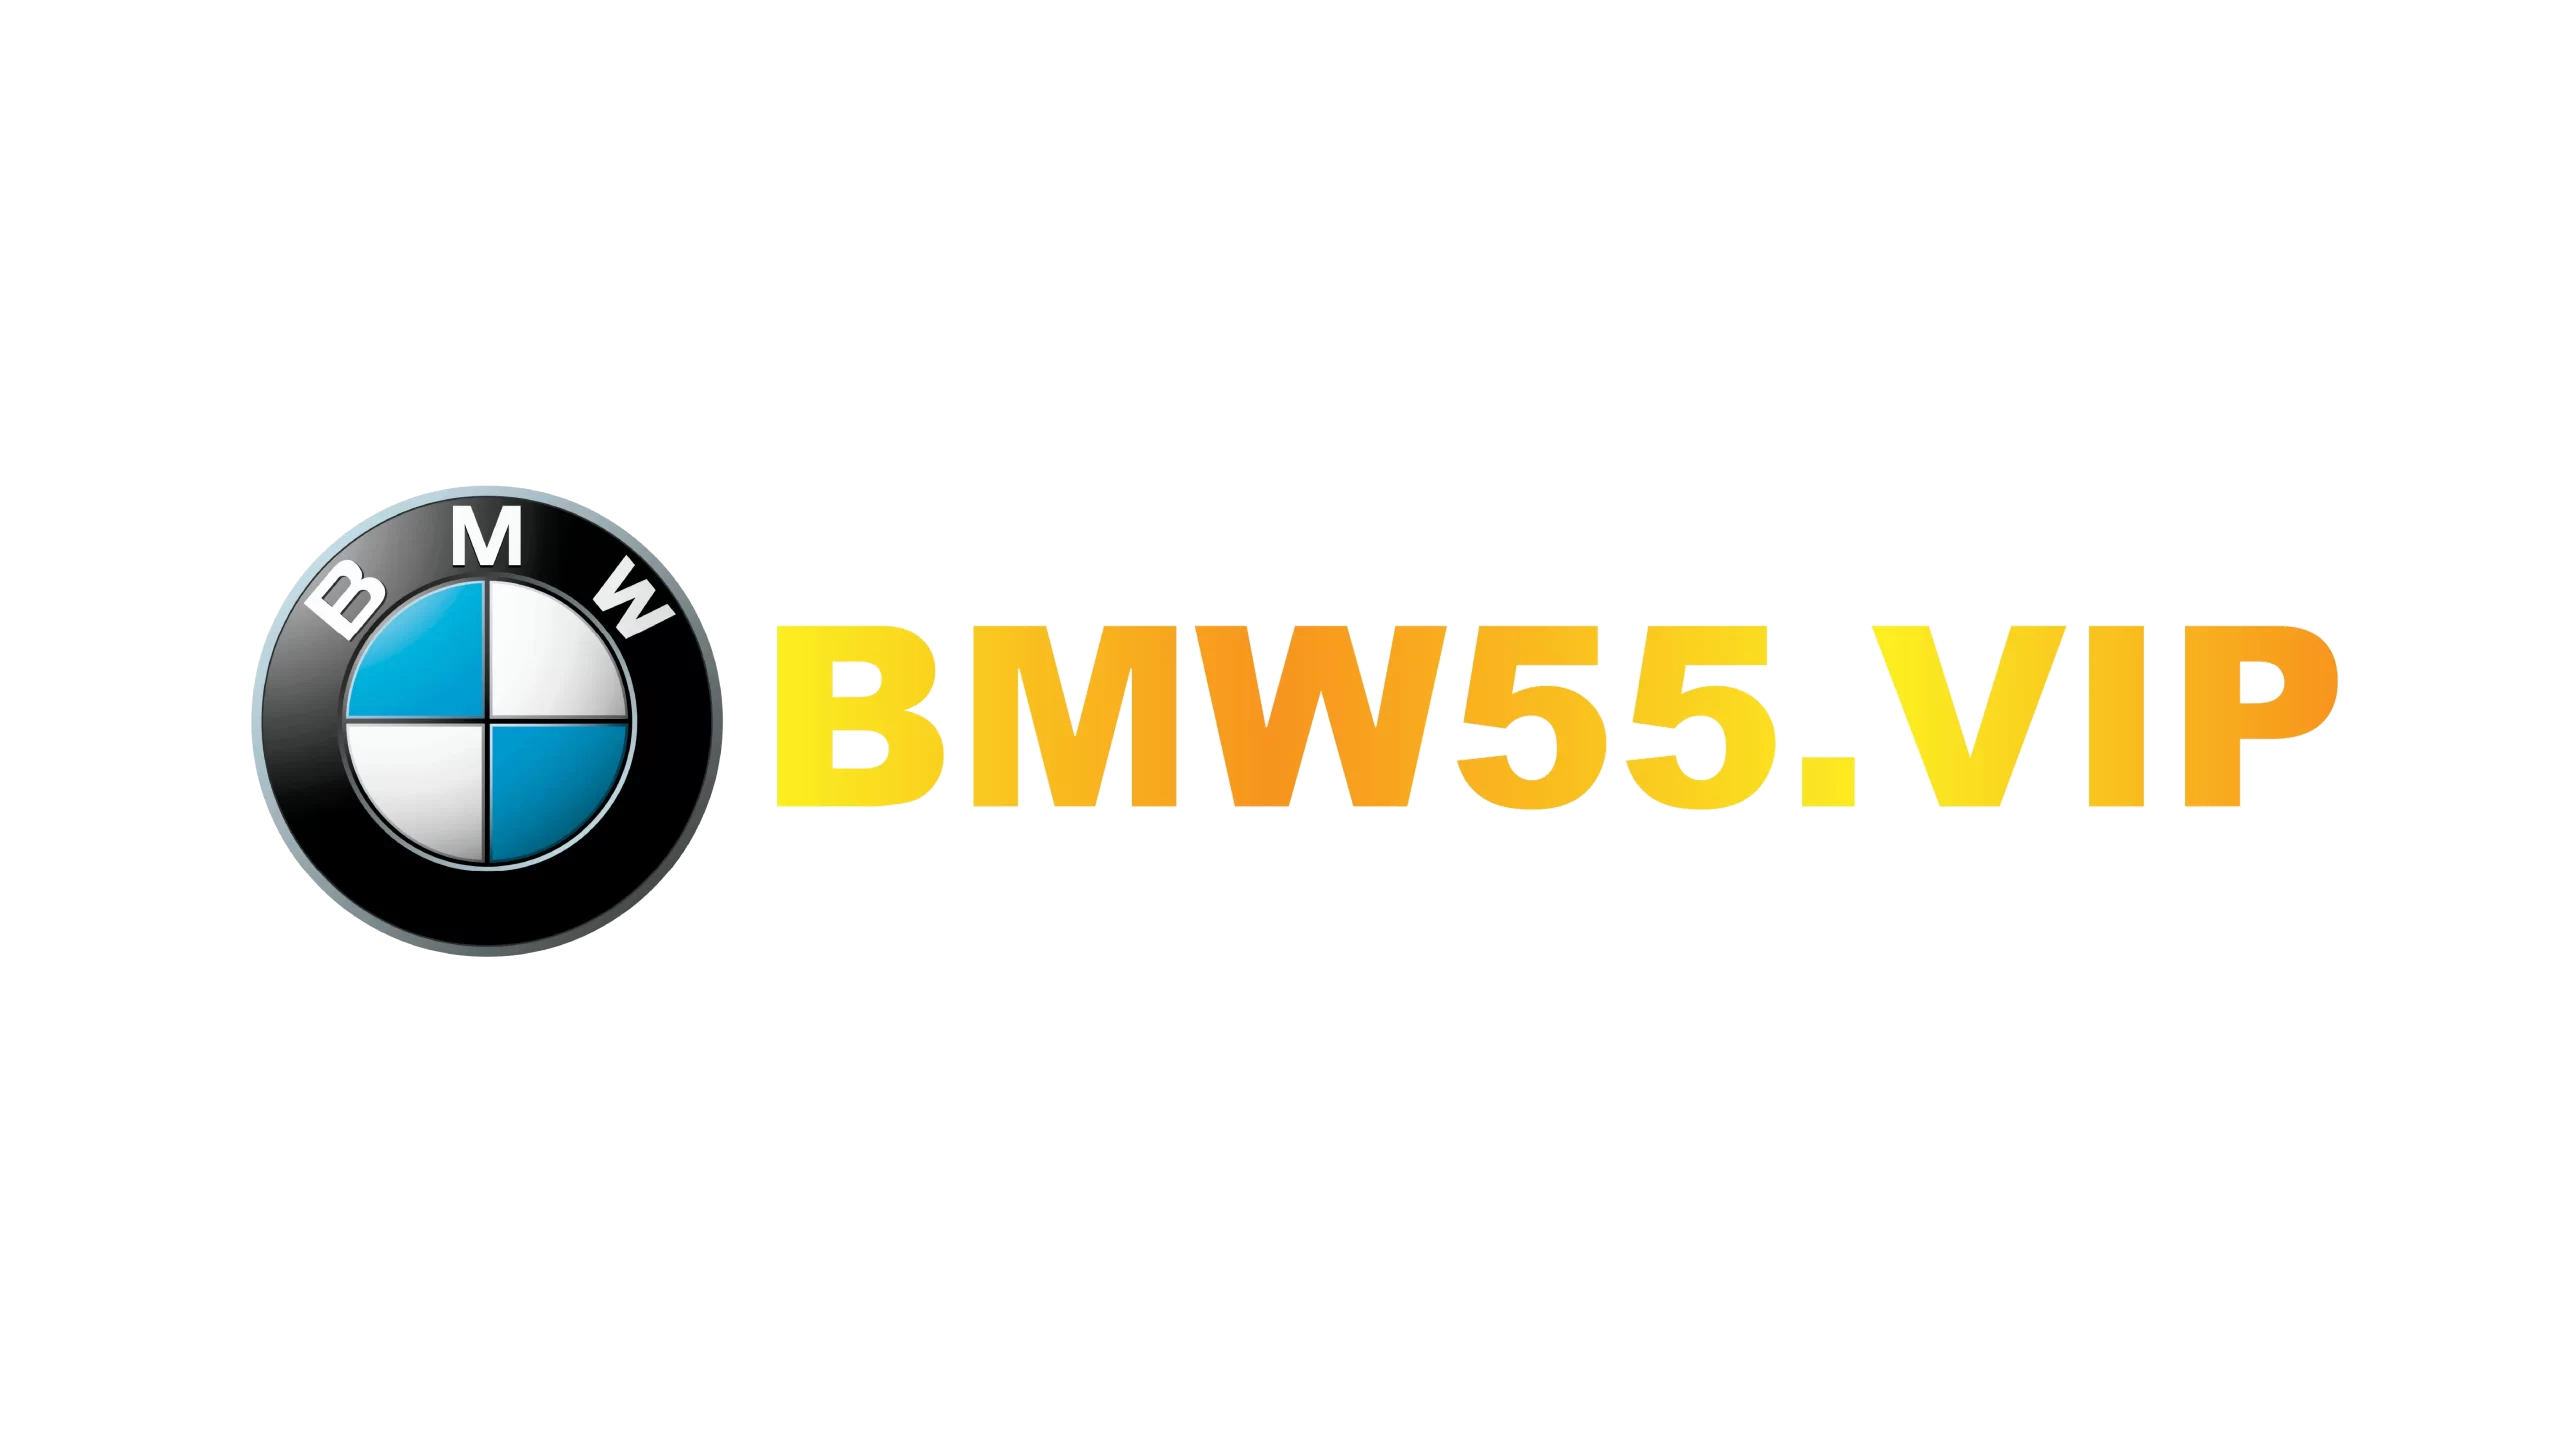 bmw555